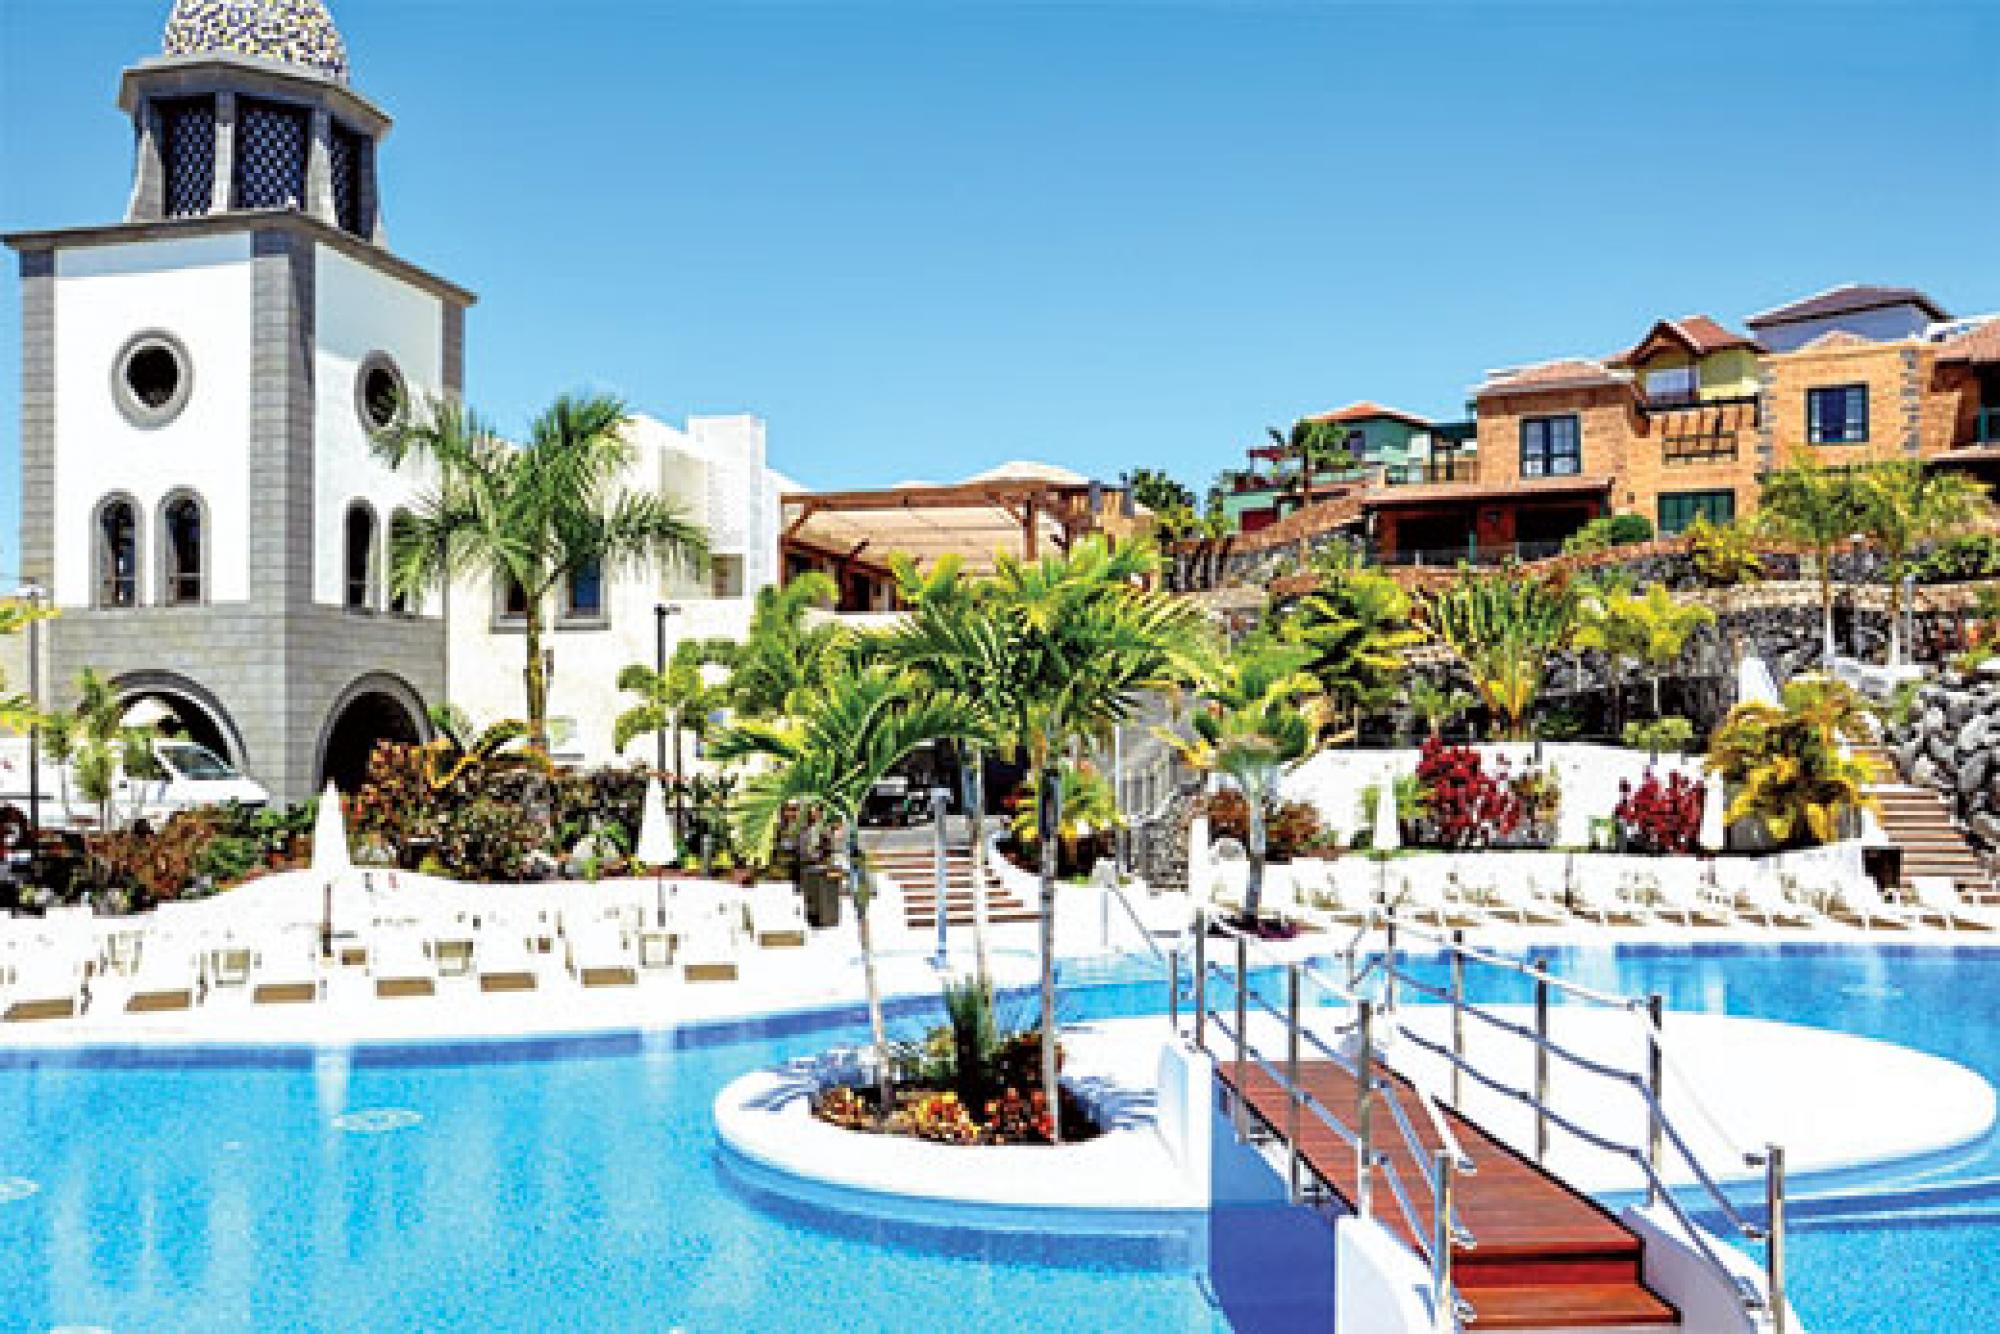 Villa Maria I in Hotel Suite Villa Maria - Tenerife